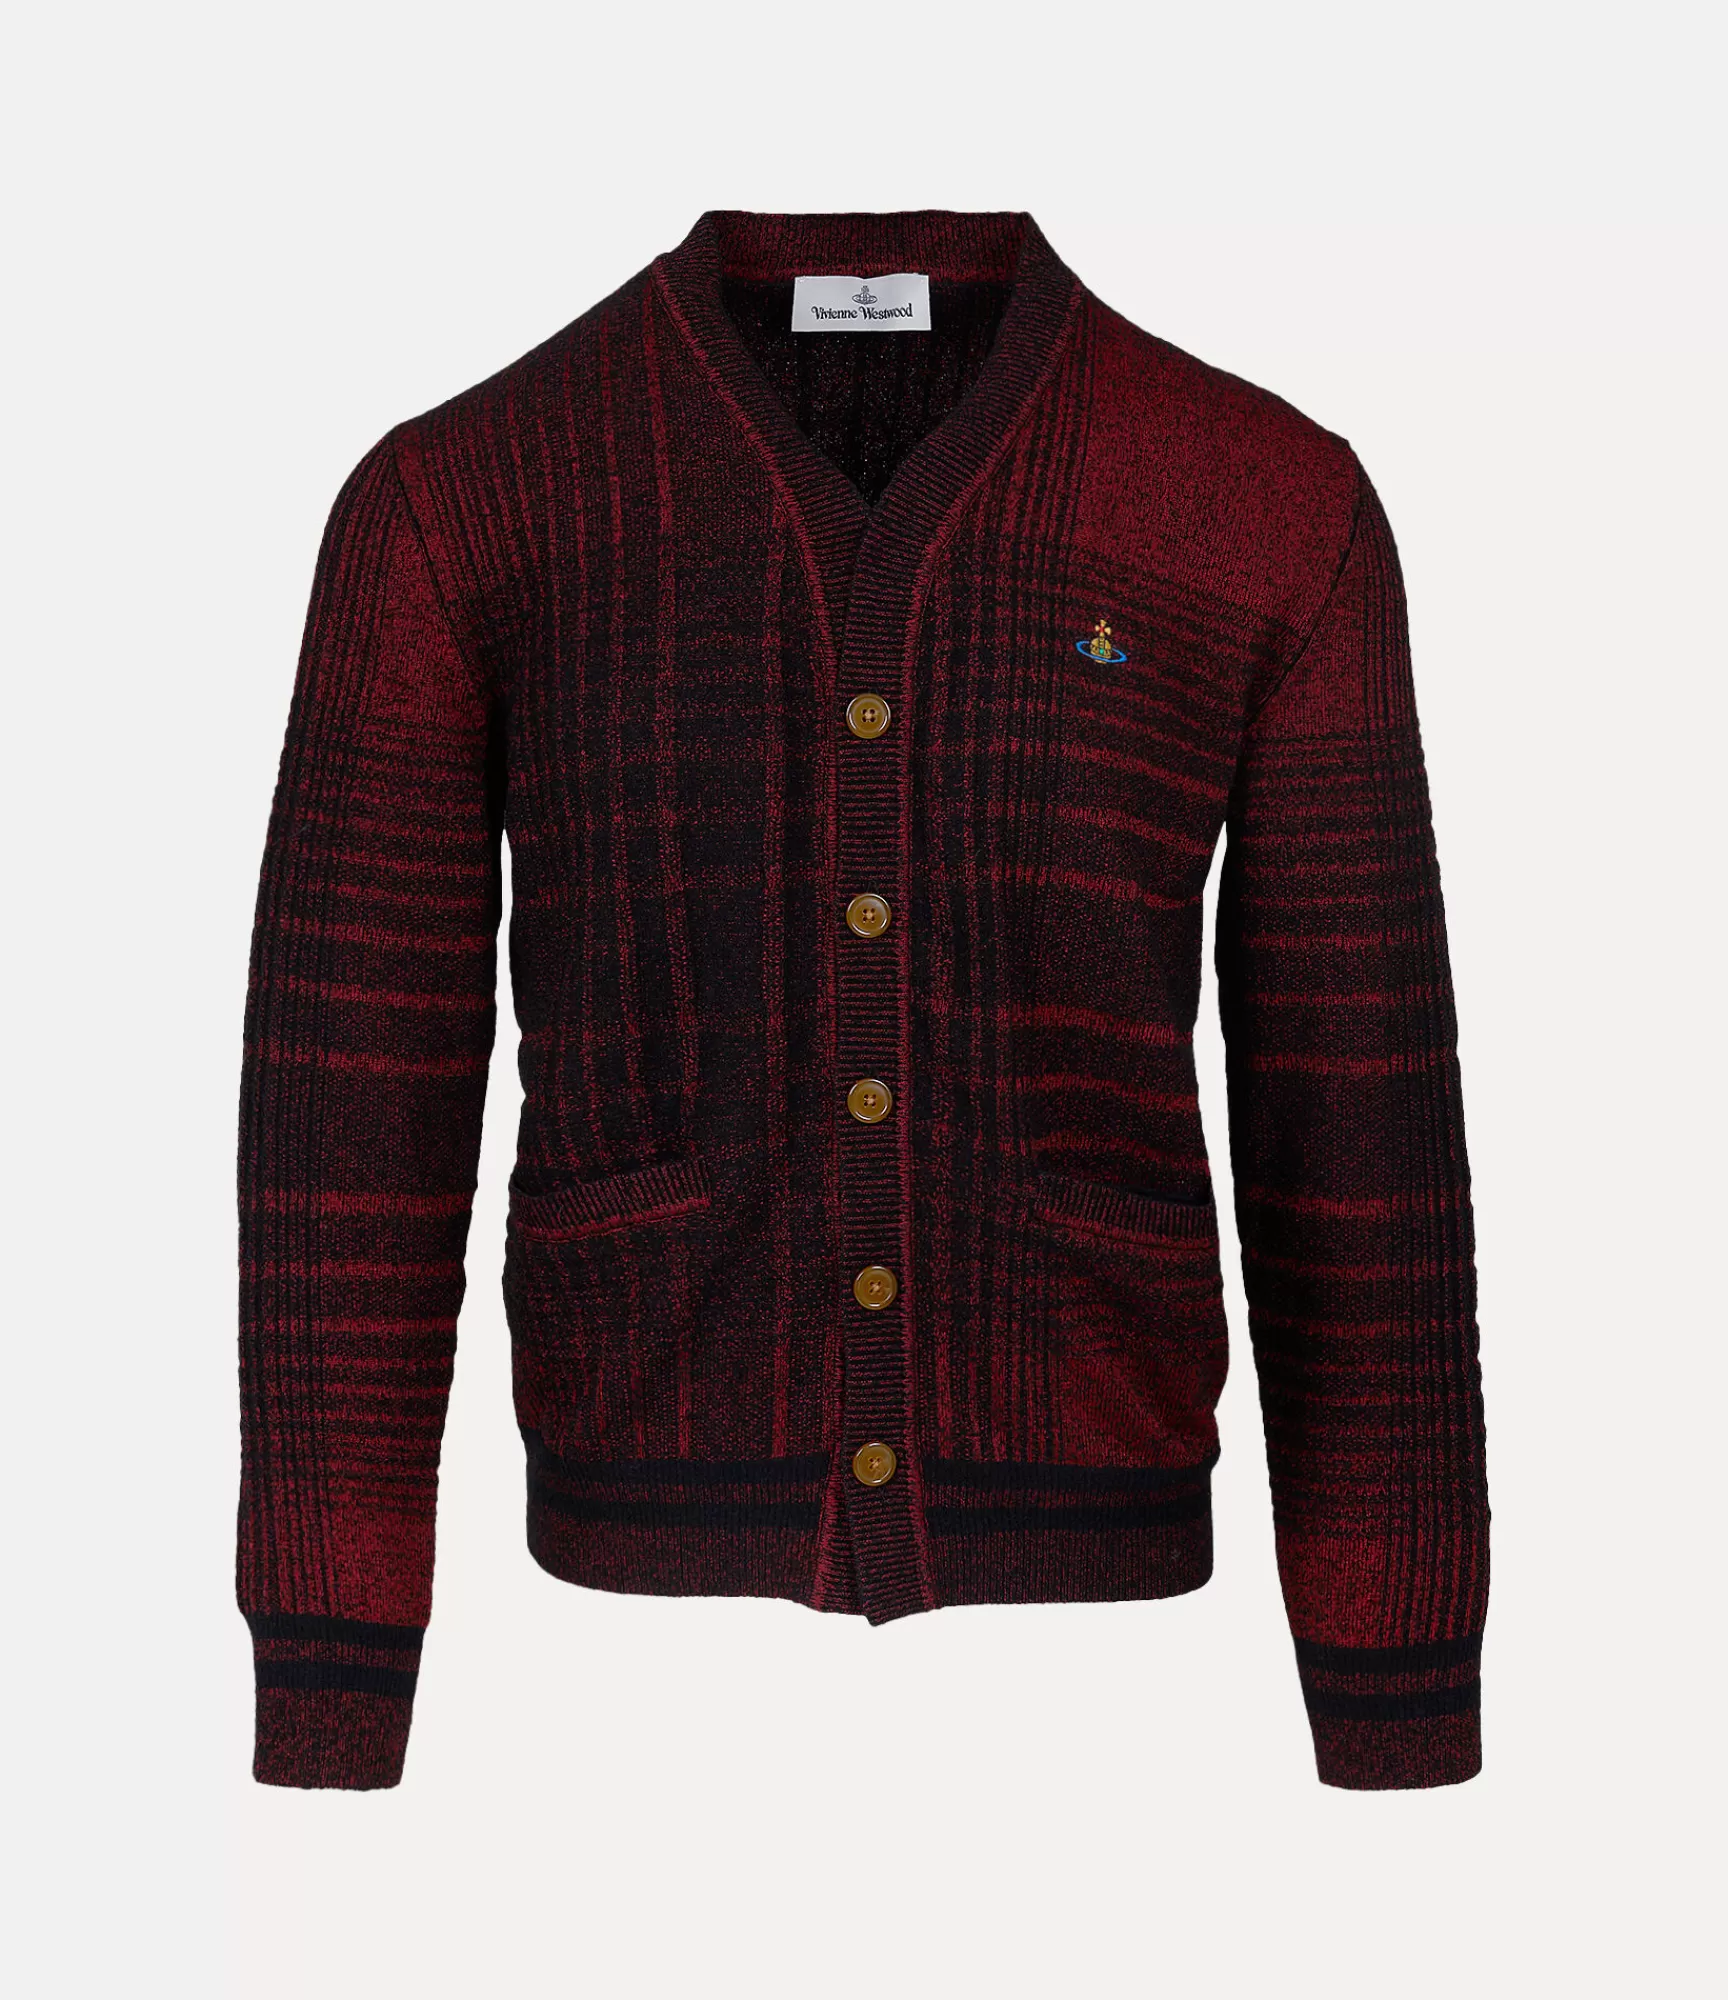 Vivienne Westwood Knitwear*Check cardigan Black/red